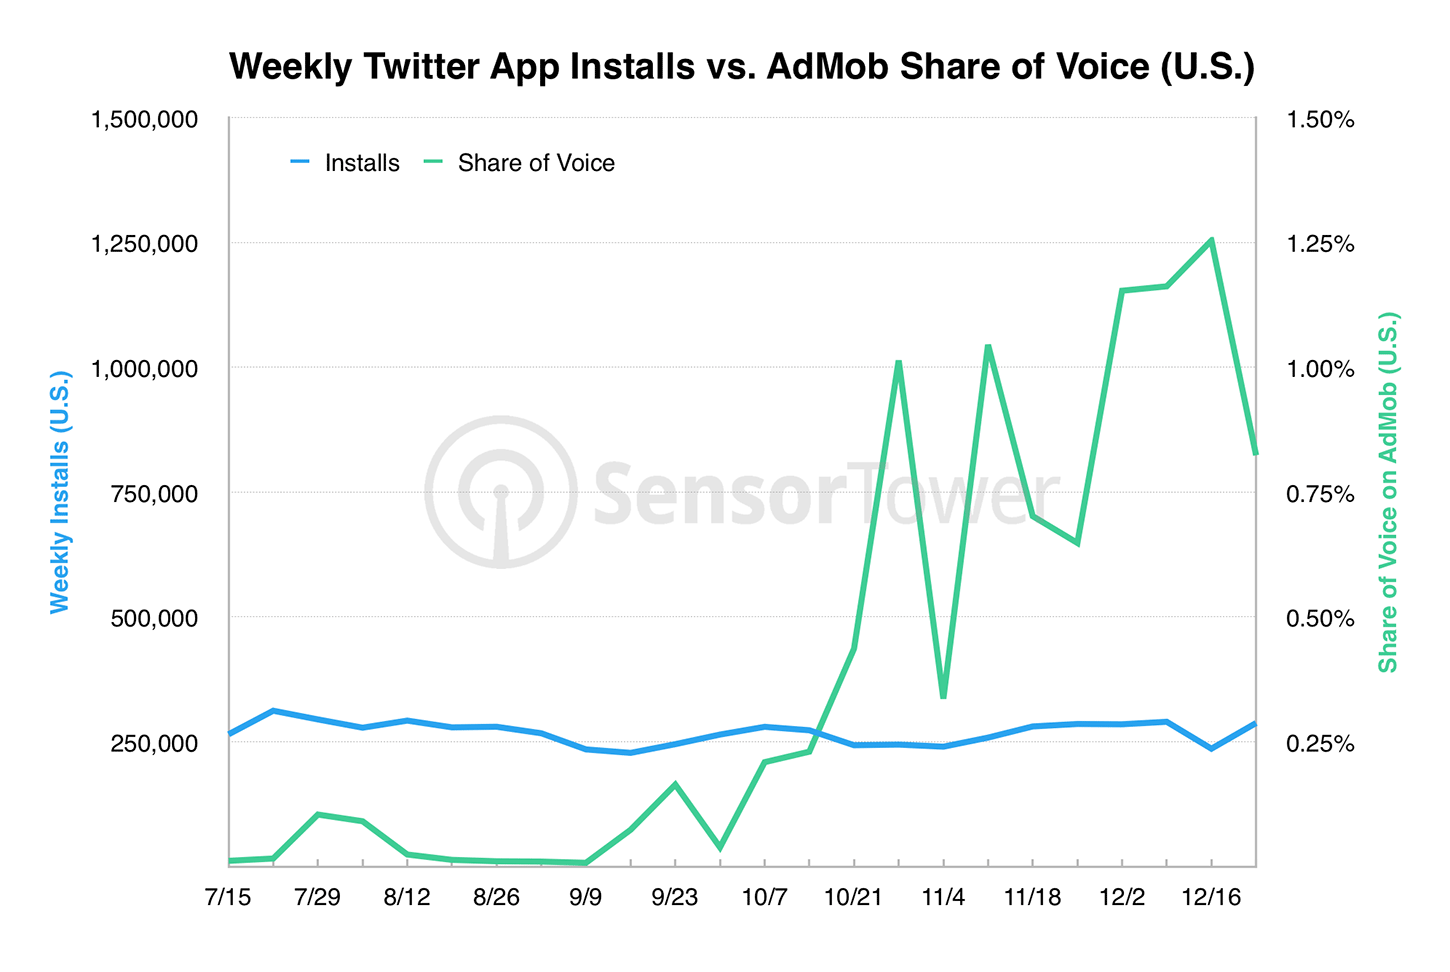 Twitter iOS App Installs vs. Share of Voice on AdMob